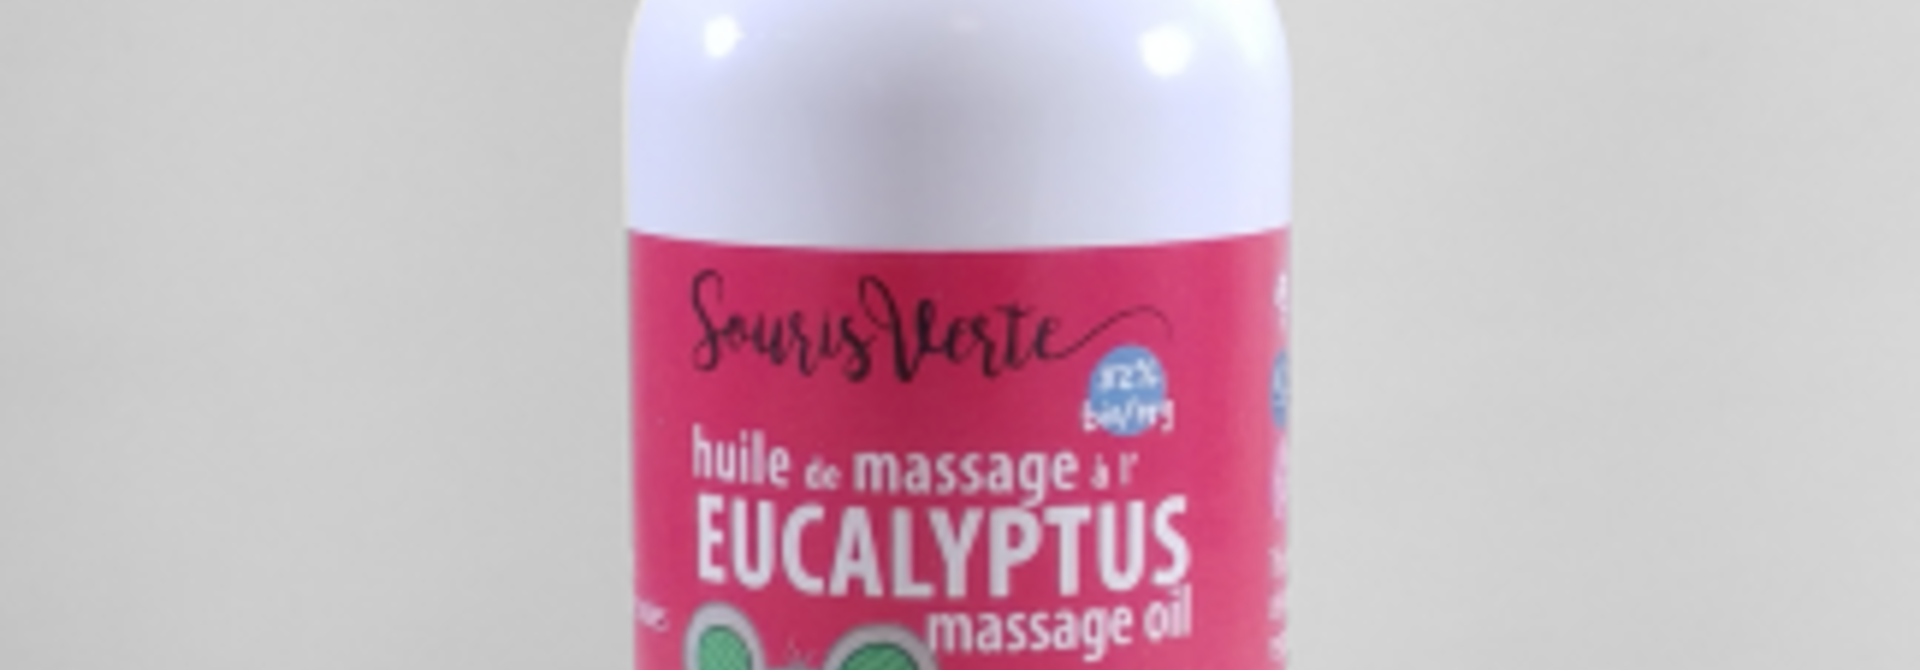 Huile de massage à l'EUCALYPTUS 120ml